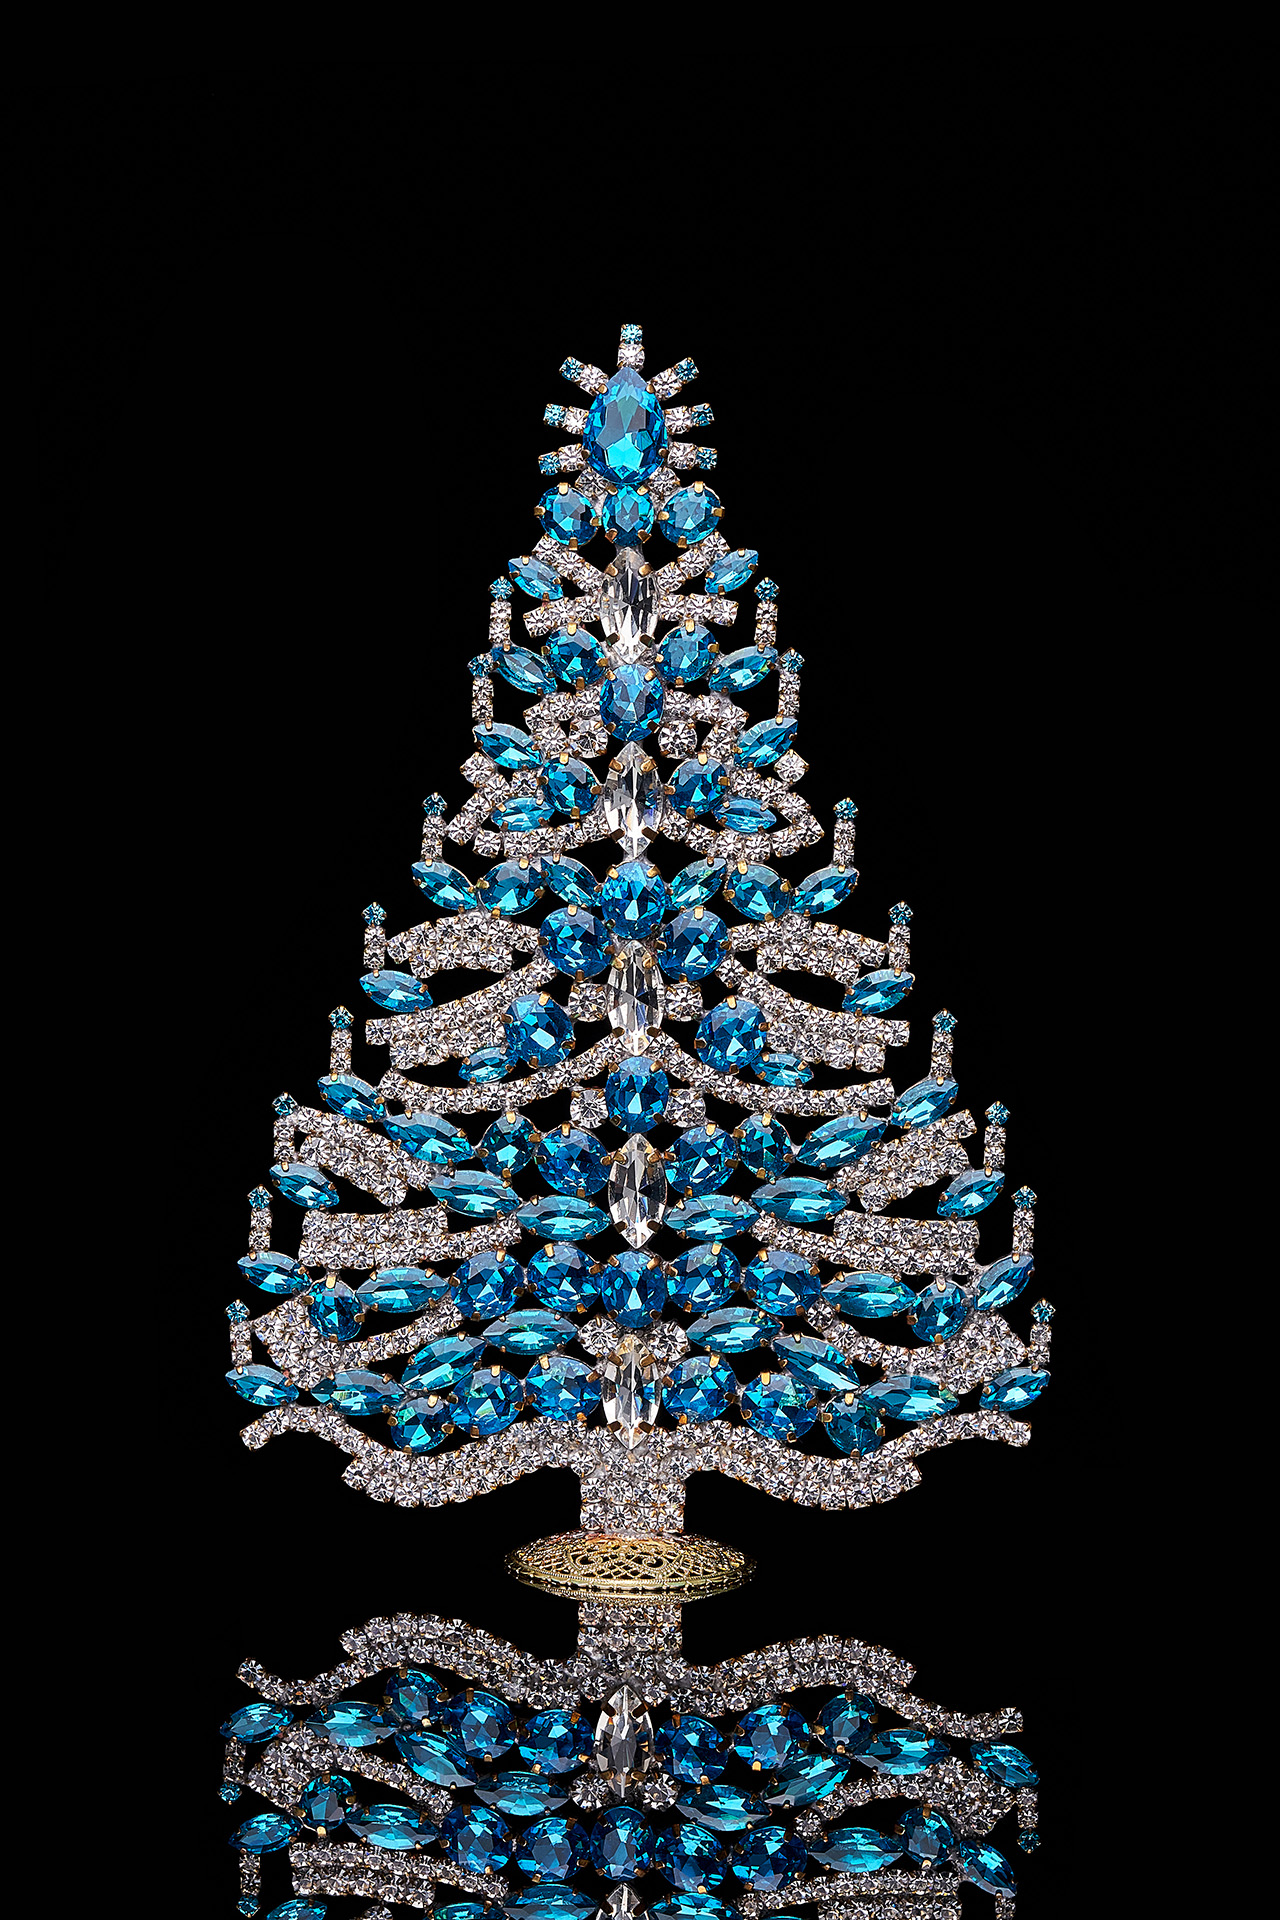 Handmade tabletop Christmas tree with aqua rhinestones